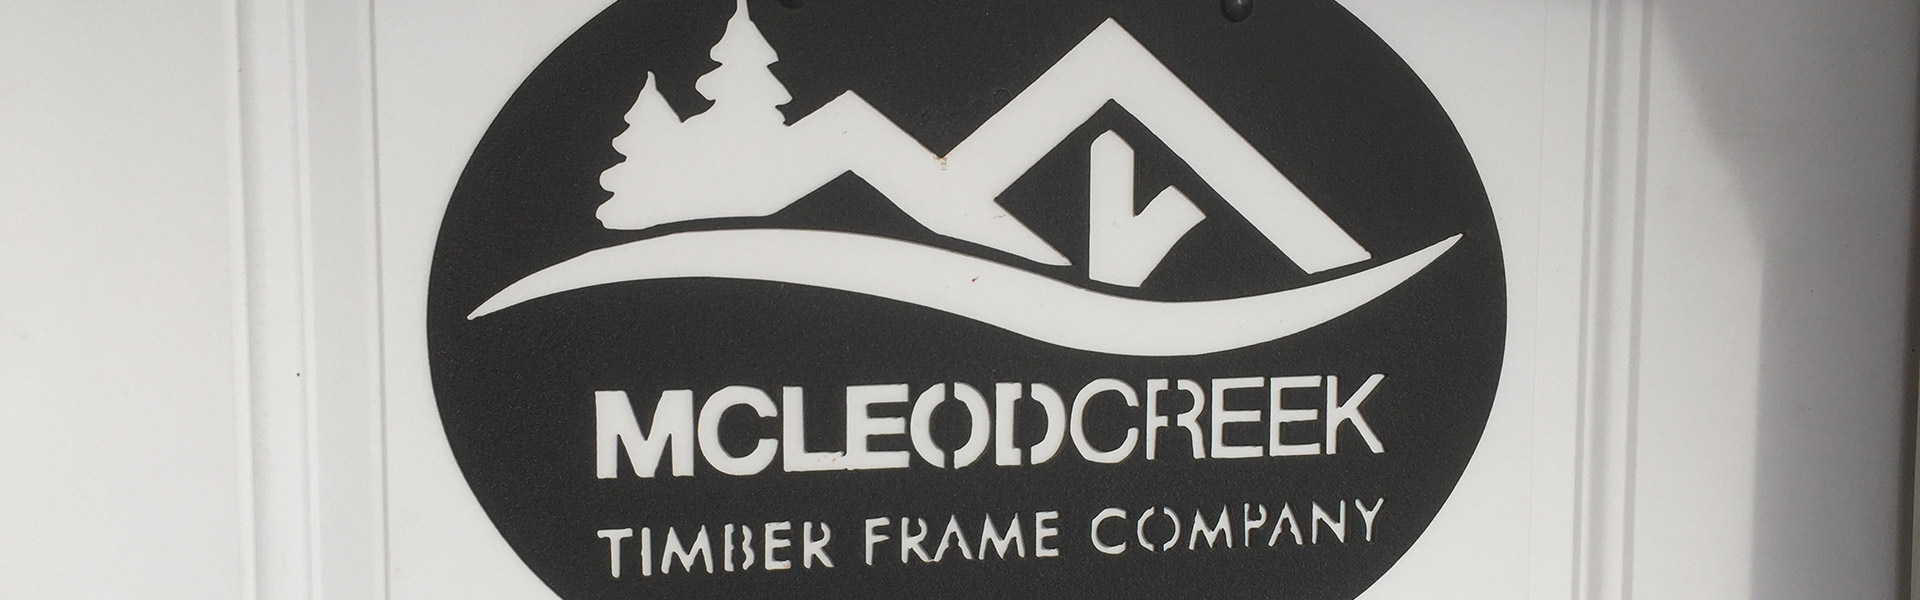 Contact Us - McLeod Creek Timberframe Company